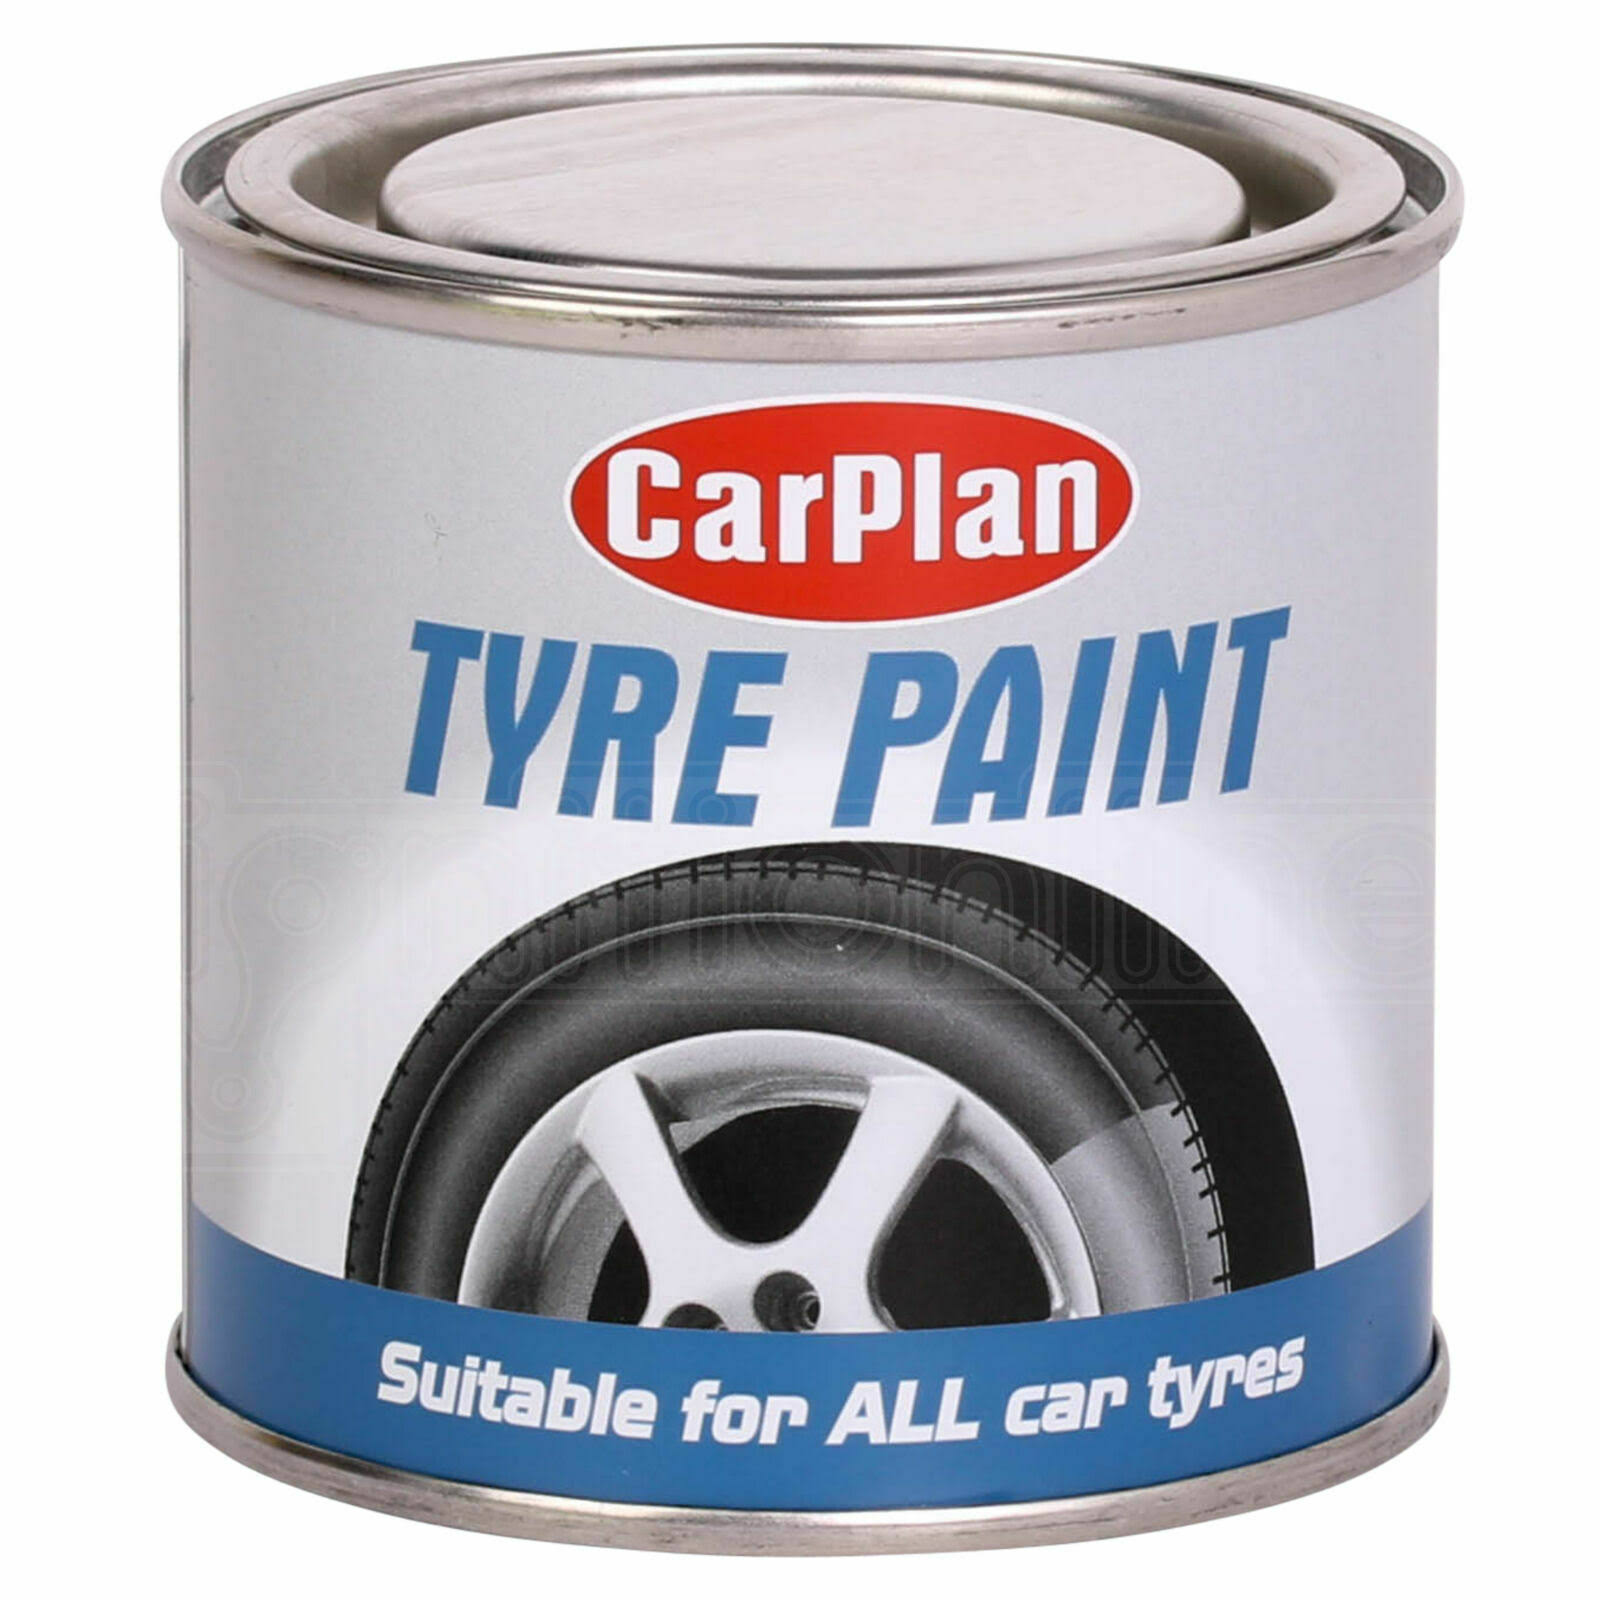 CarPlan Wheel Paint - Black, 250ml